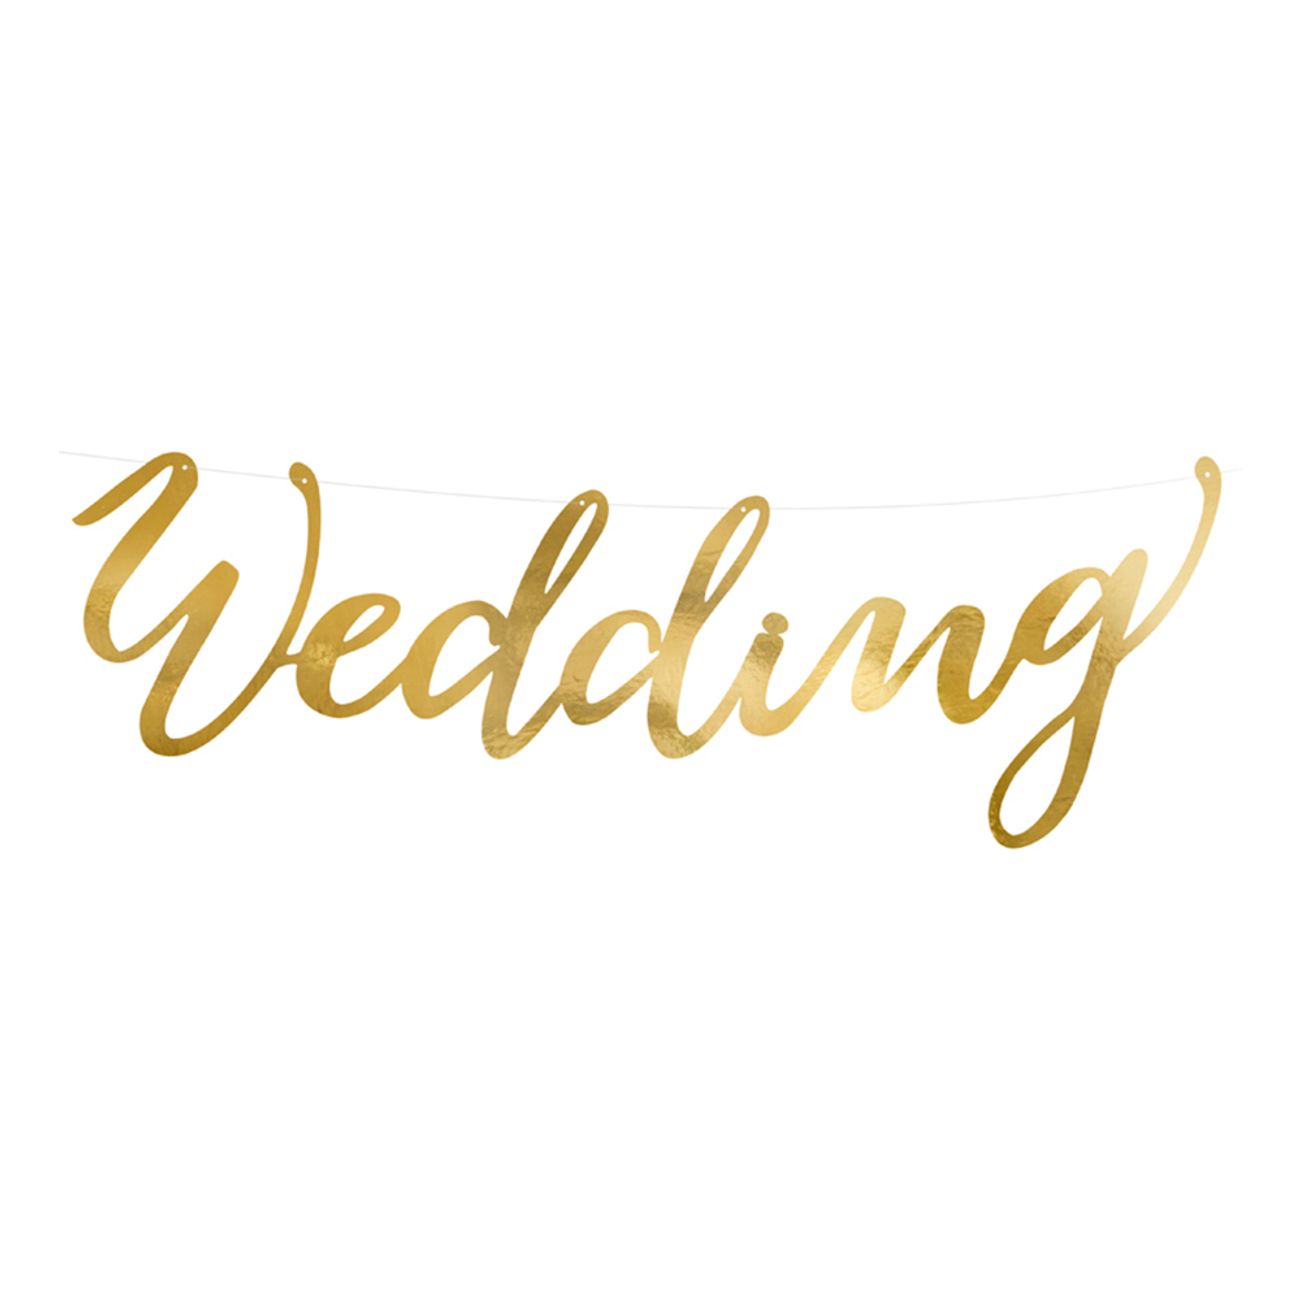 brollopsgirlang-wedding-guld-1